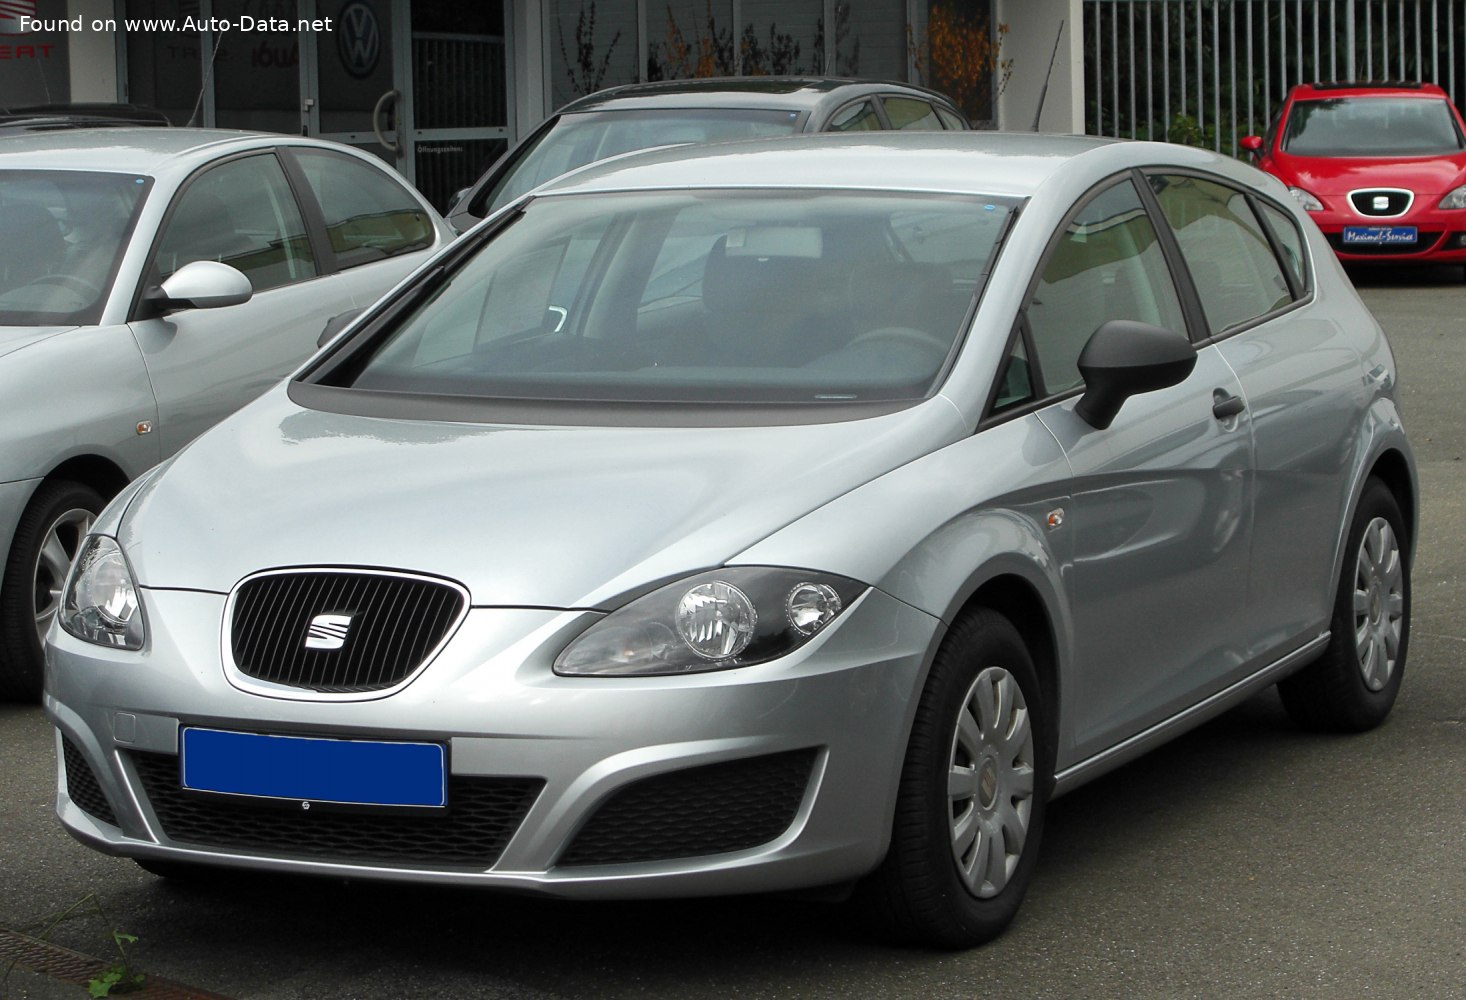 2009 Seat Leon II (1P, facelift 2009) FR 2.0 TFSI (211 Hp) DSG